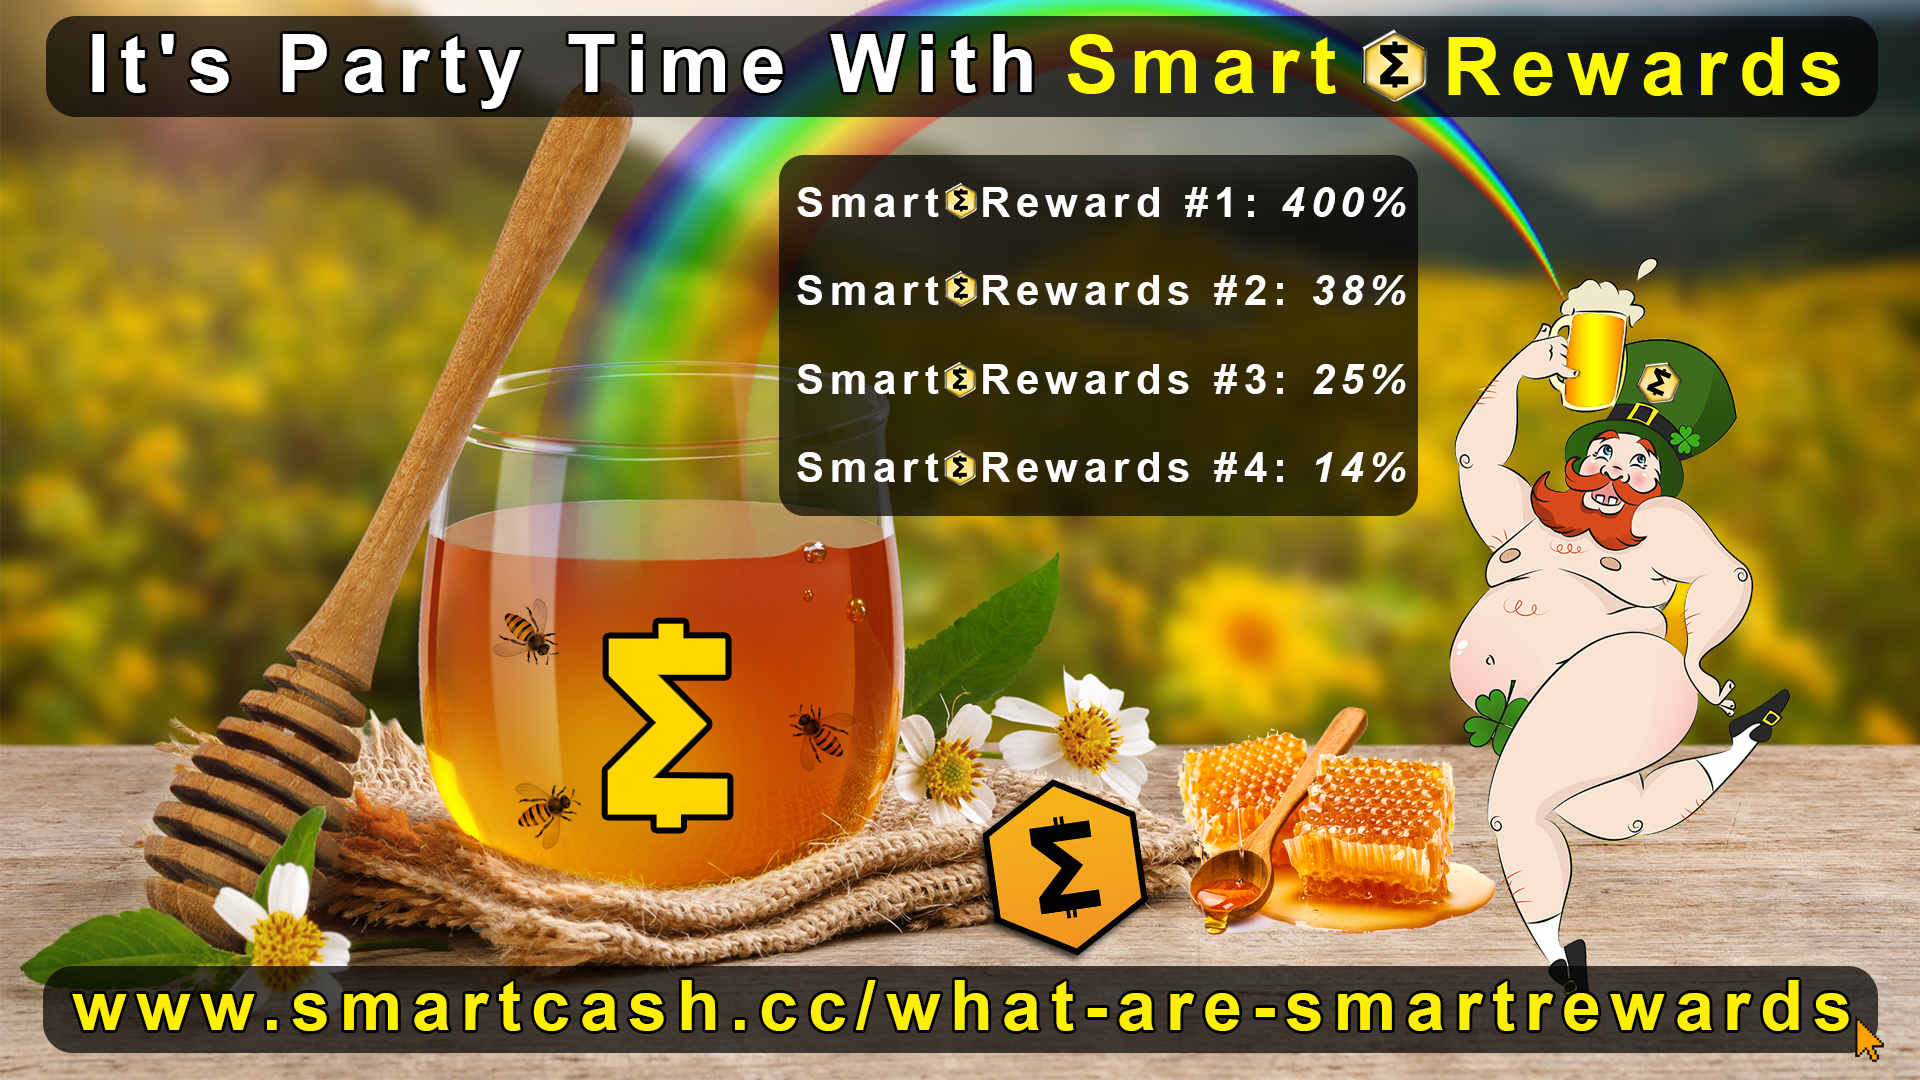 11-smart-rewards-party-time.png